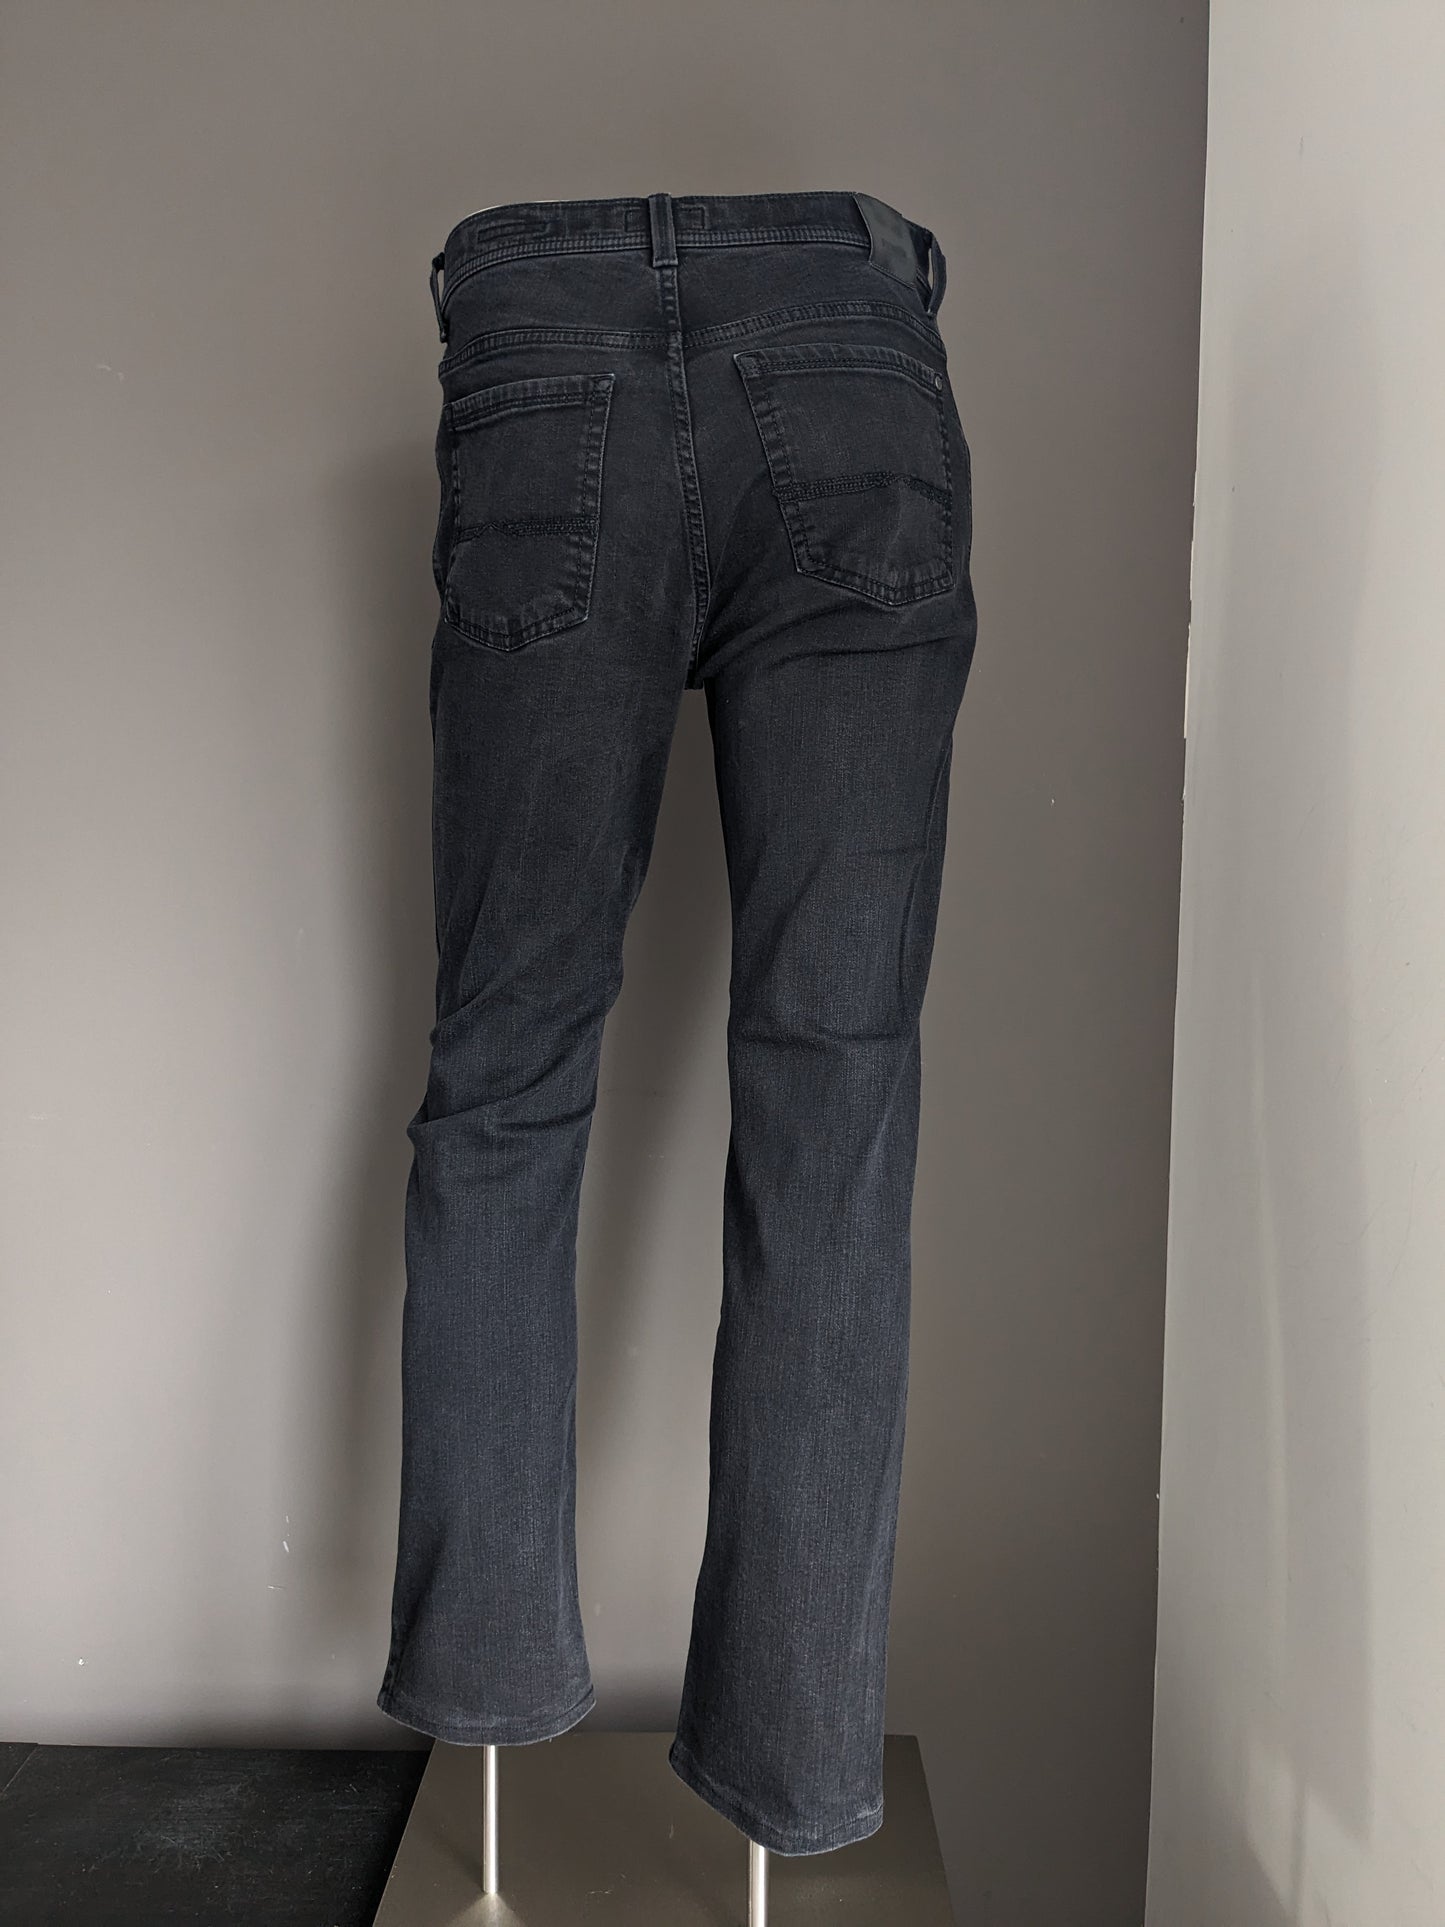 Pioneer jeans. Zwart gekleurd. type Rando. Megaflex. Maat W33 - L30. (ingekort)